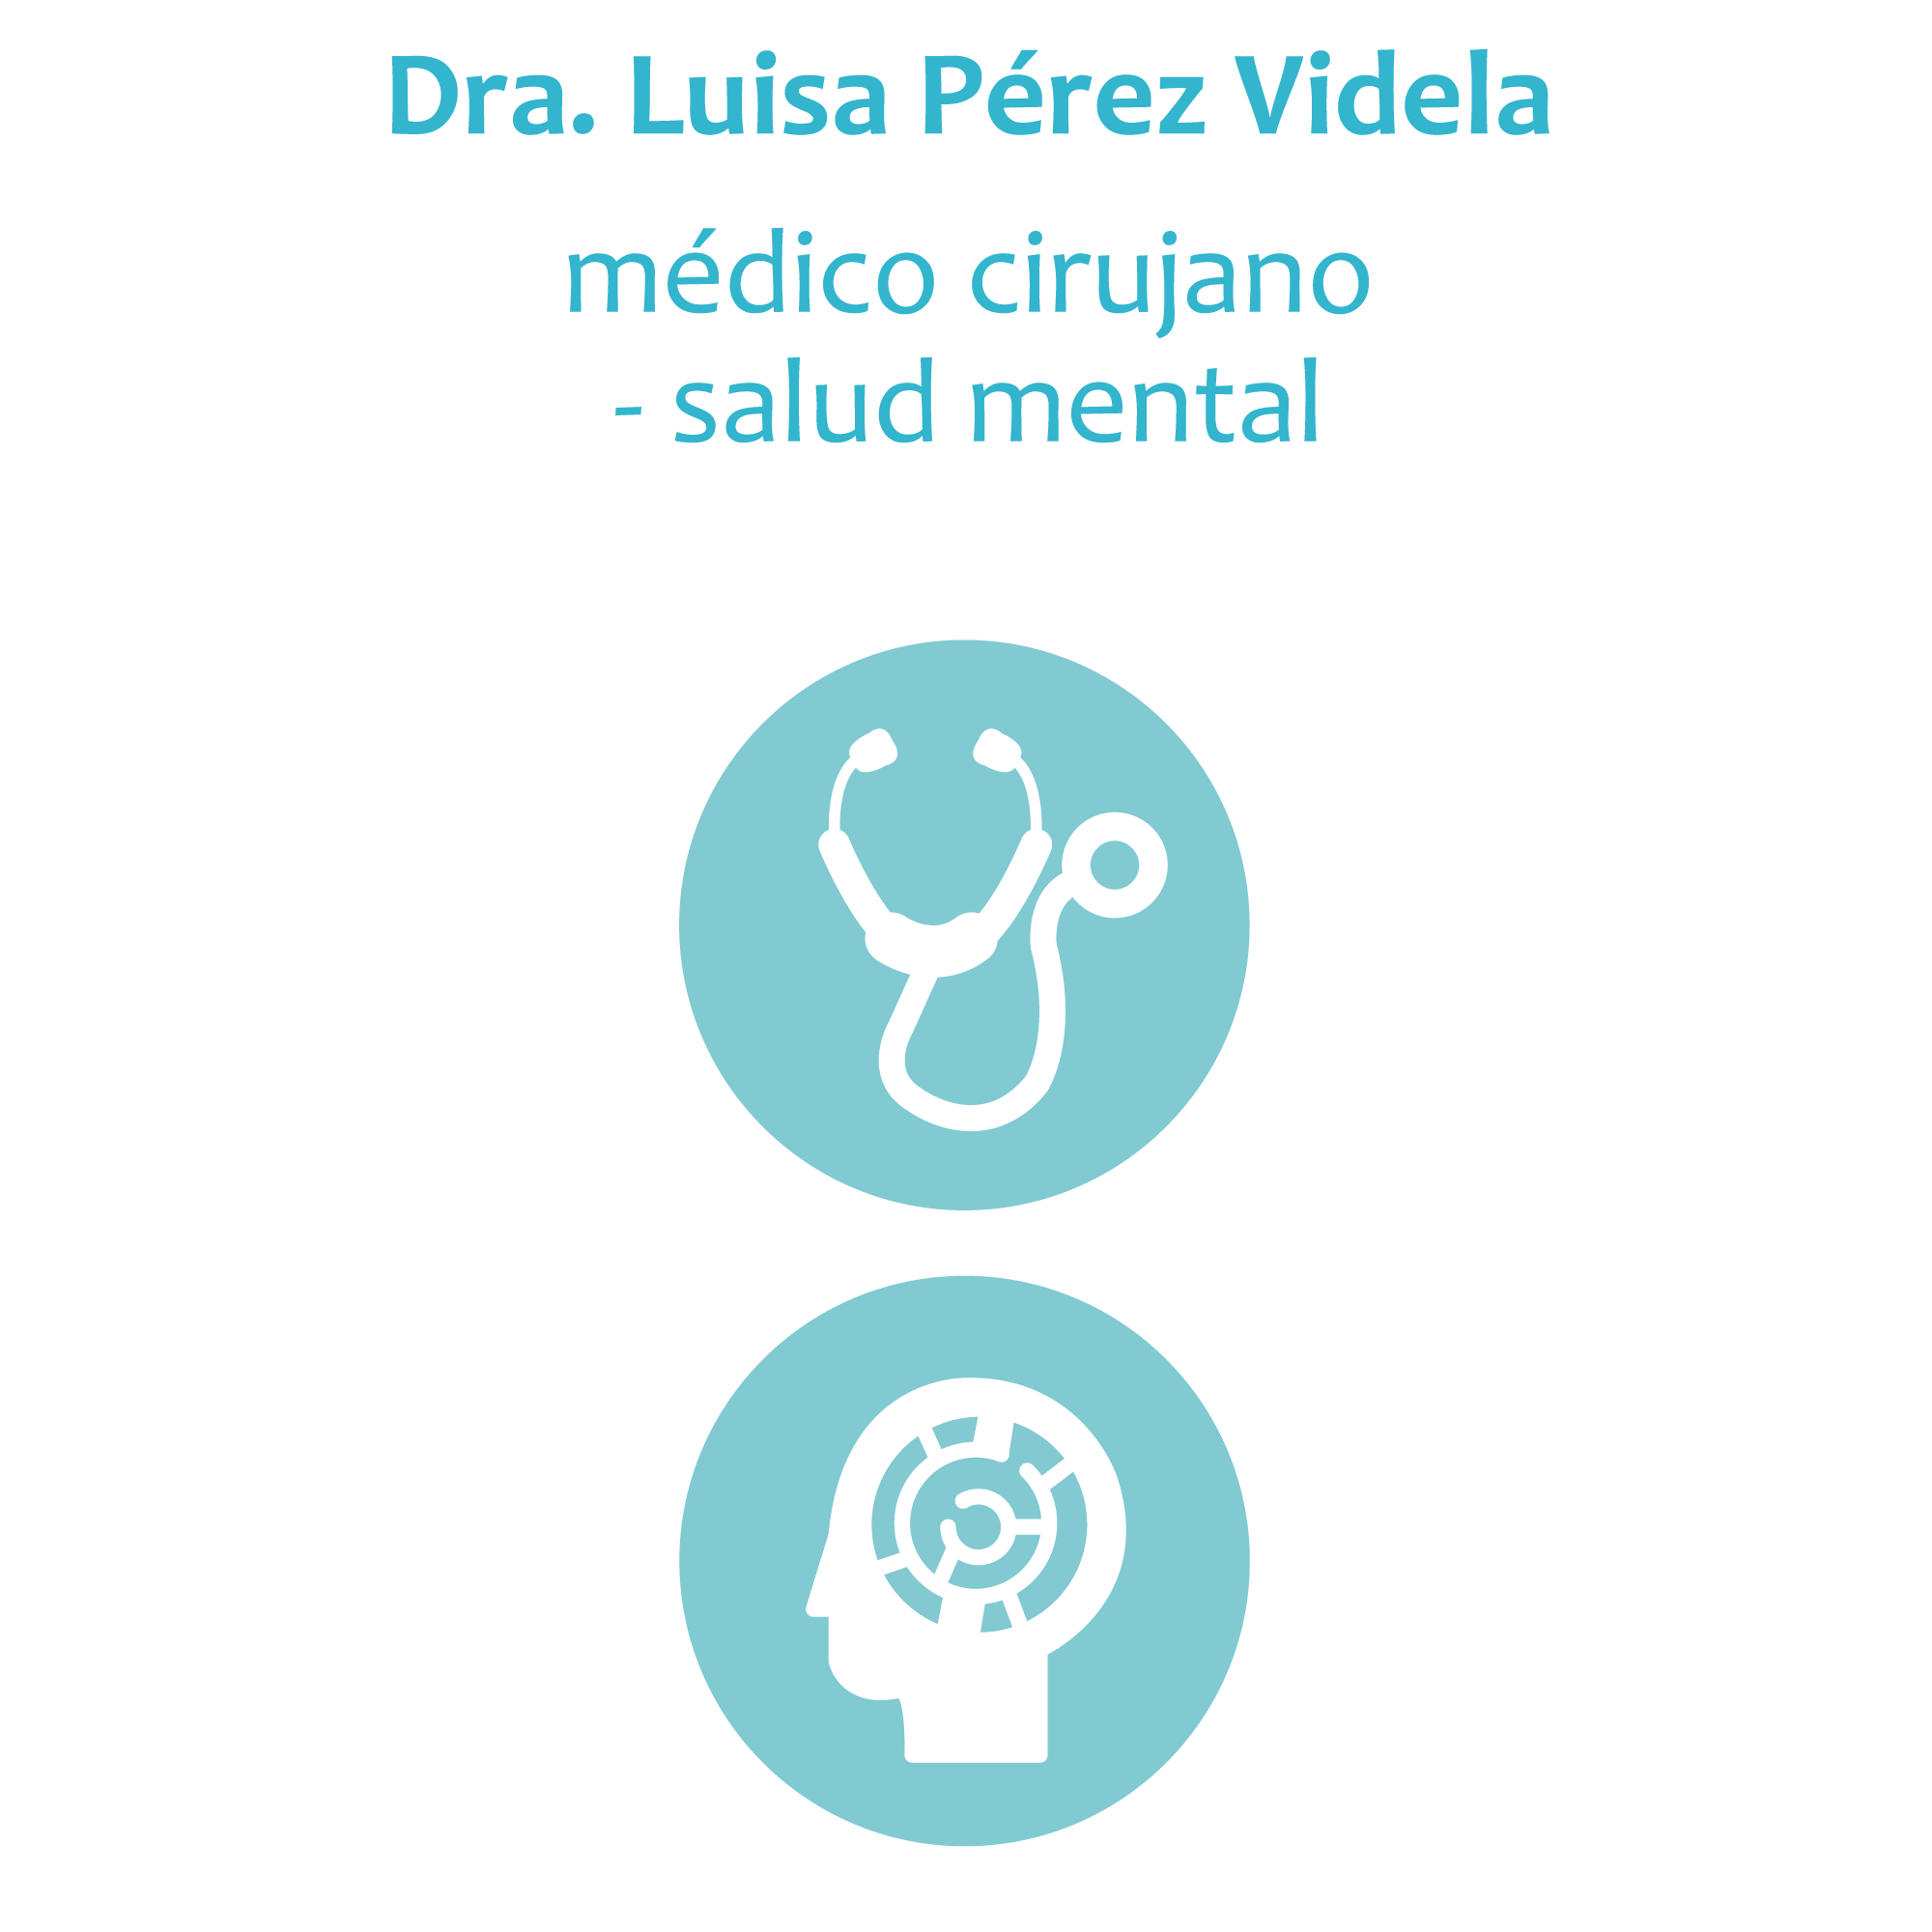 Dra. Luisa Pérez Videla